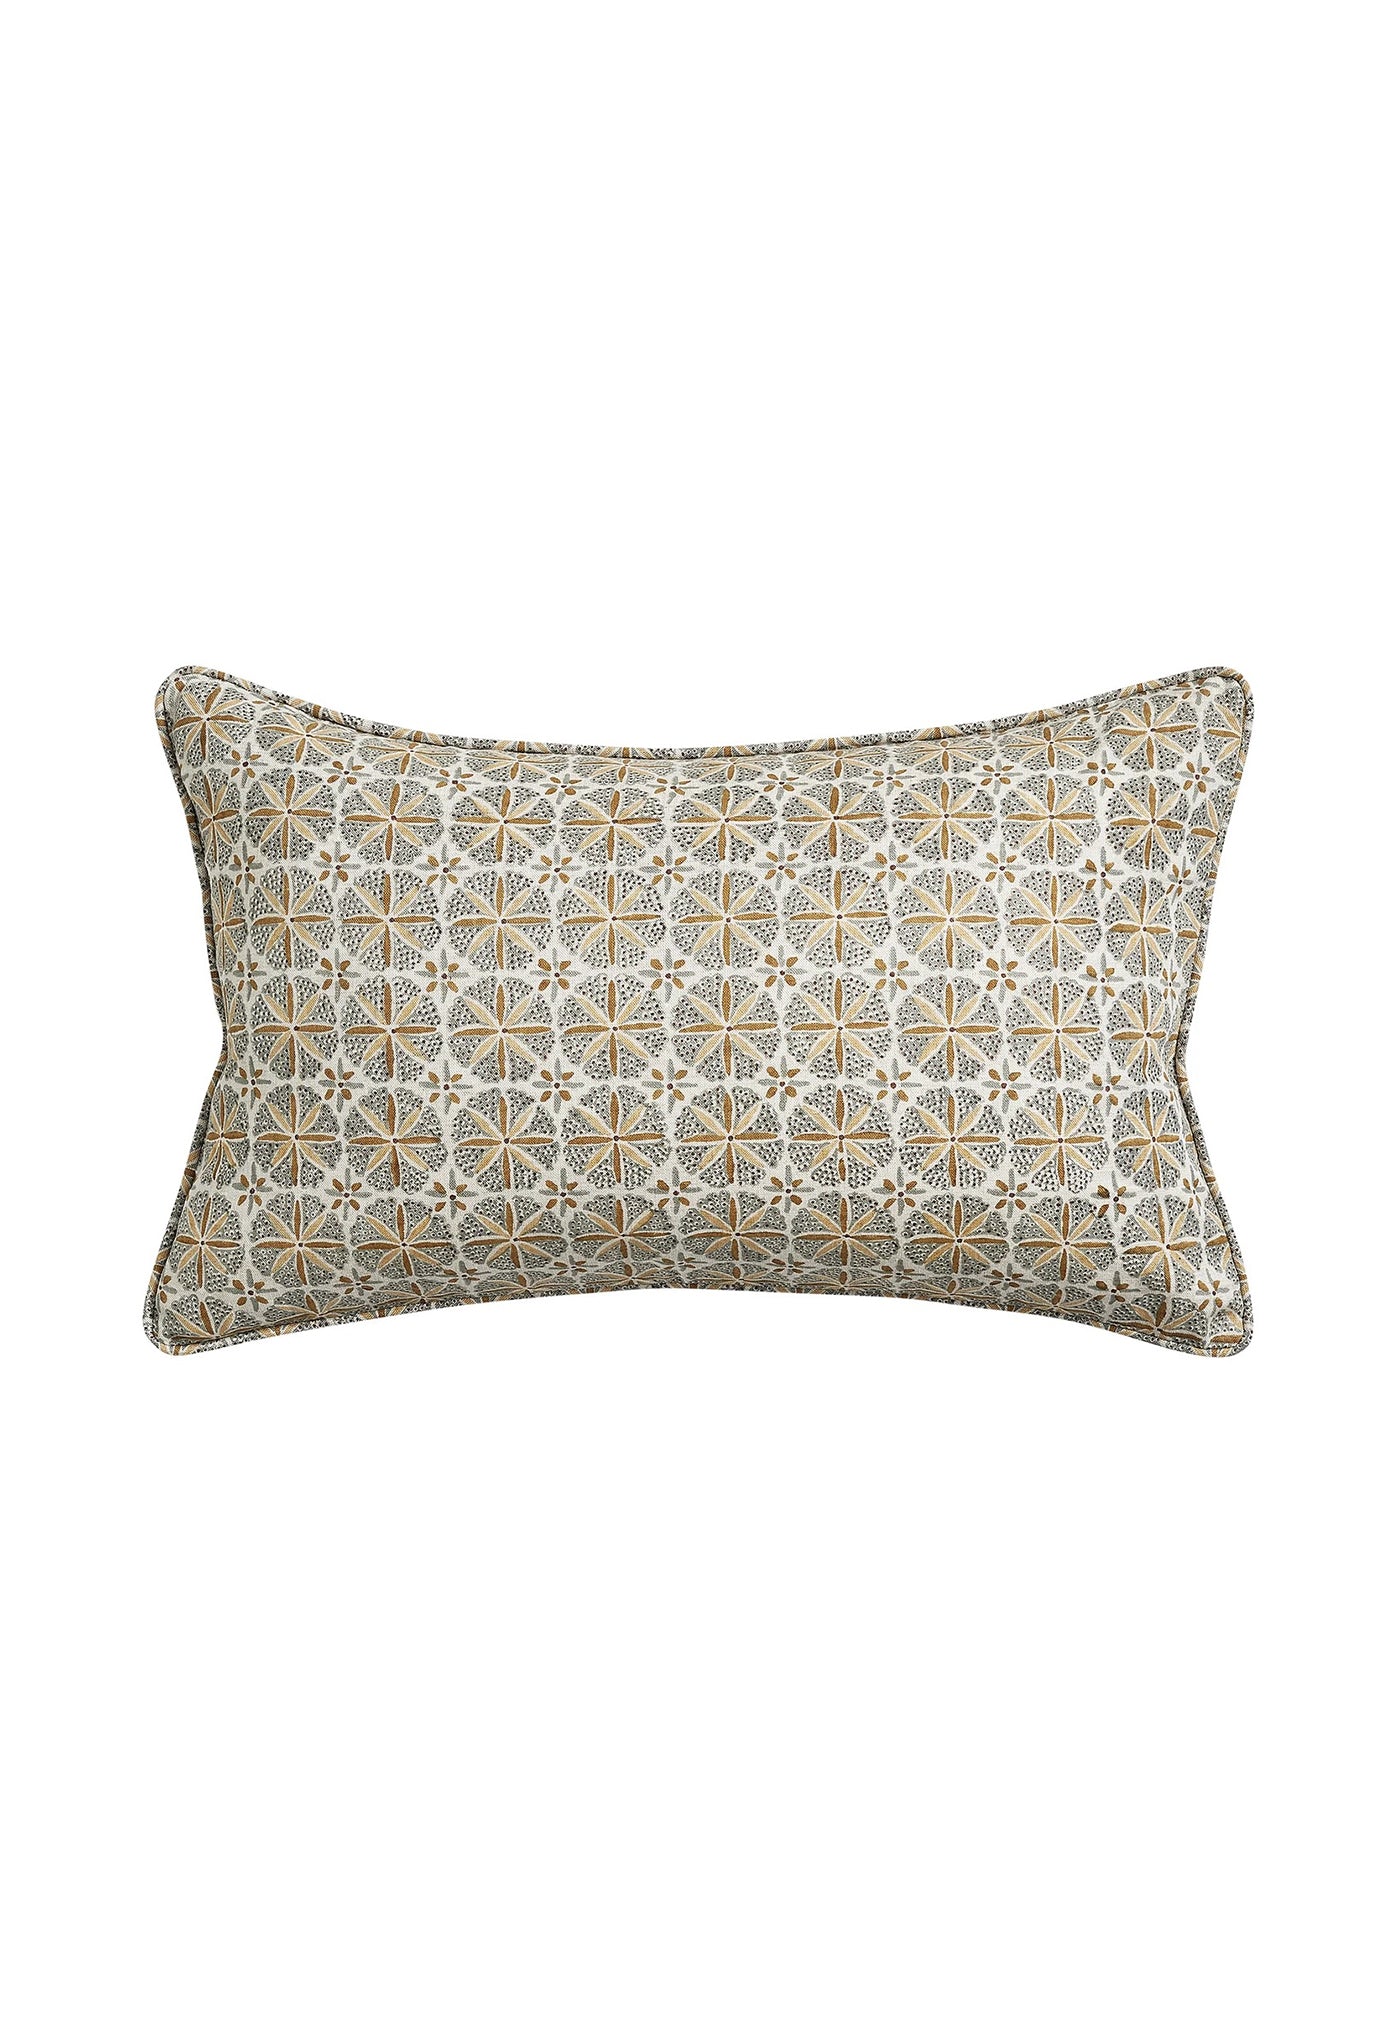 Assam Egypt Linen Cushion 35x55cm sold by Angel Divine